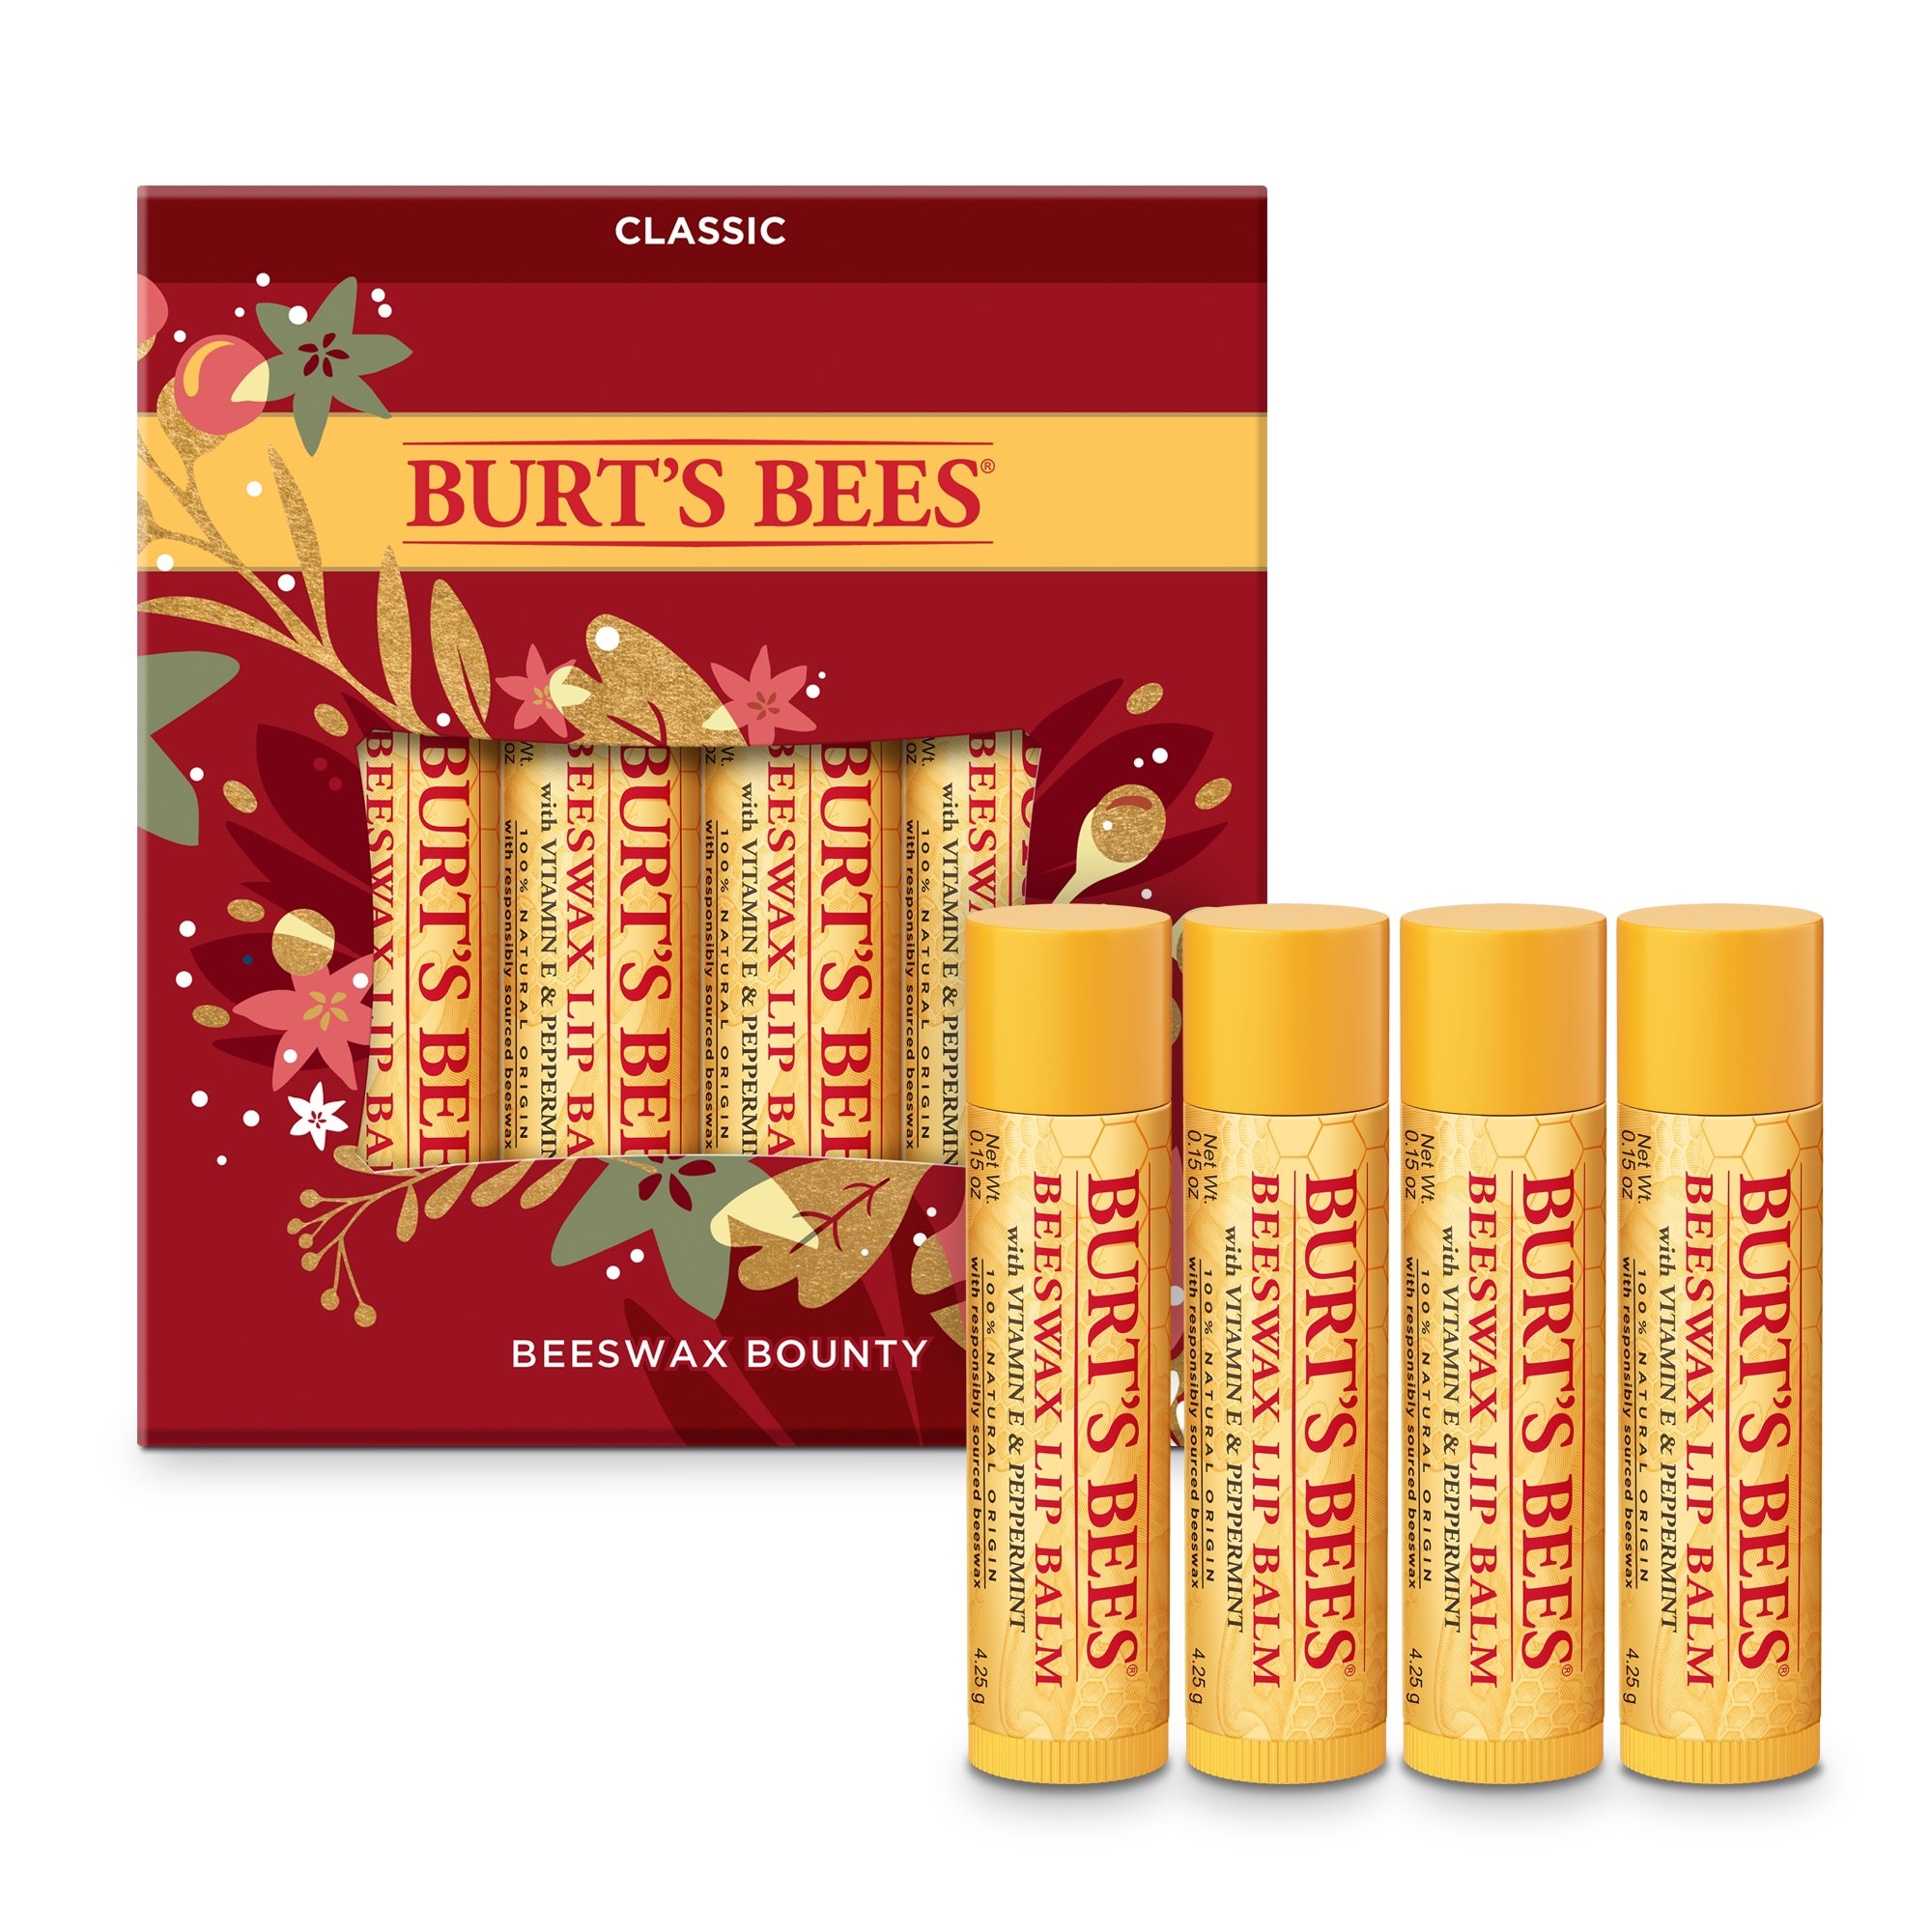 Burt's Bees® 100% Natural Origin Lip Balm Beeswax 4.25g, Skin